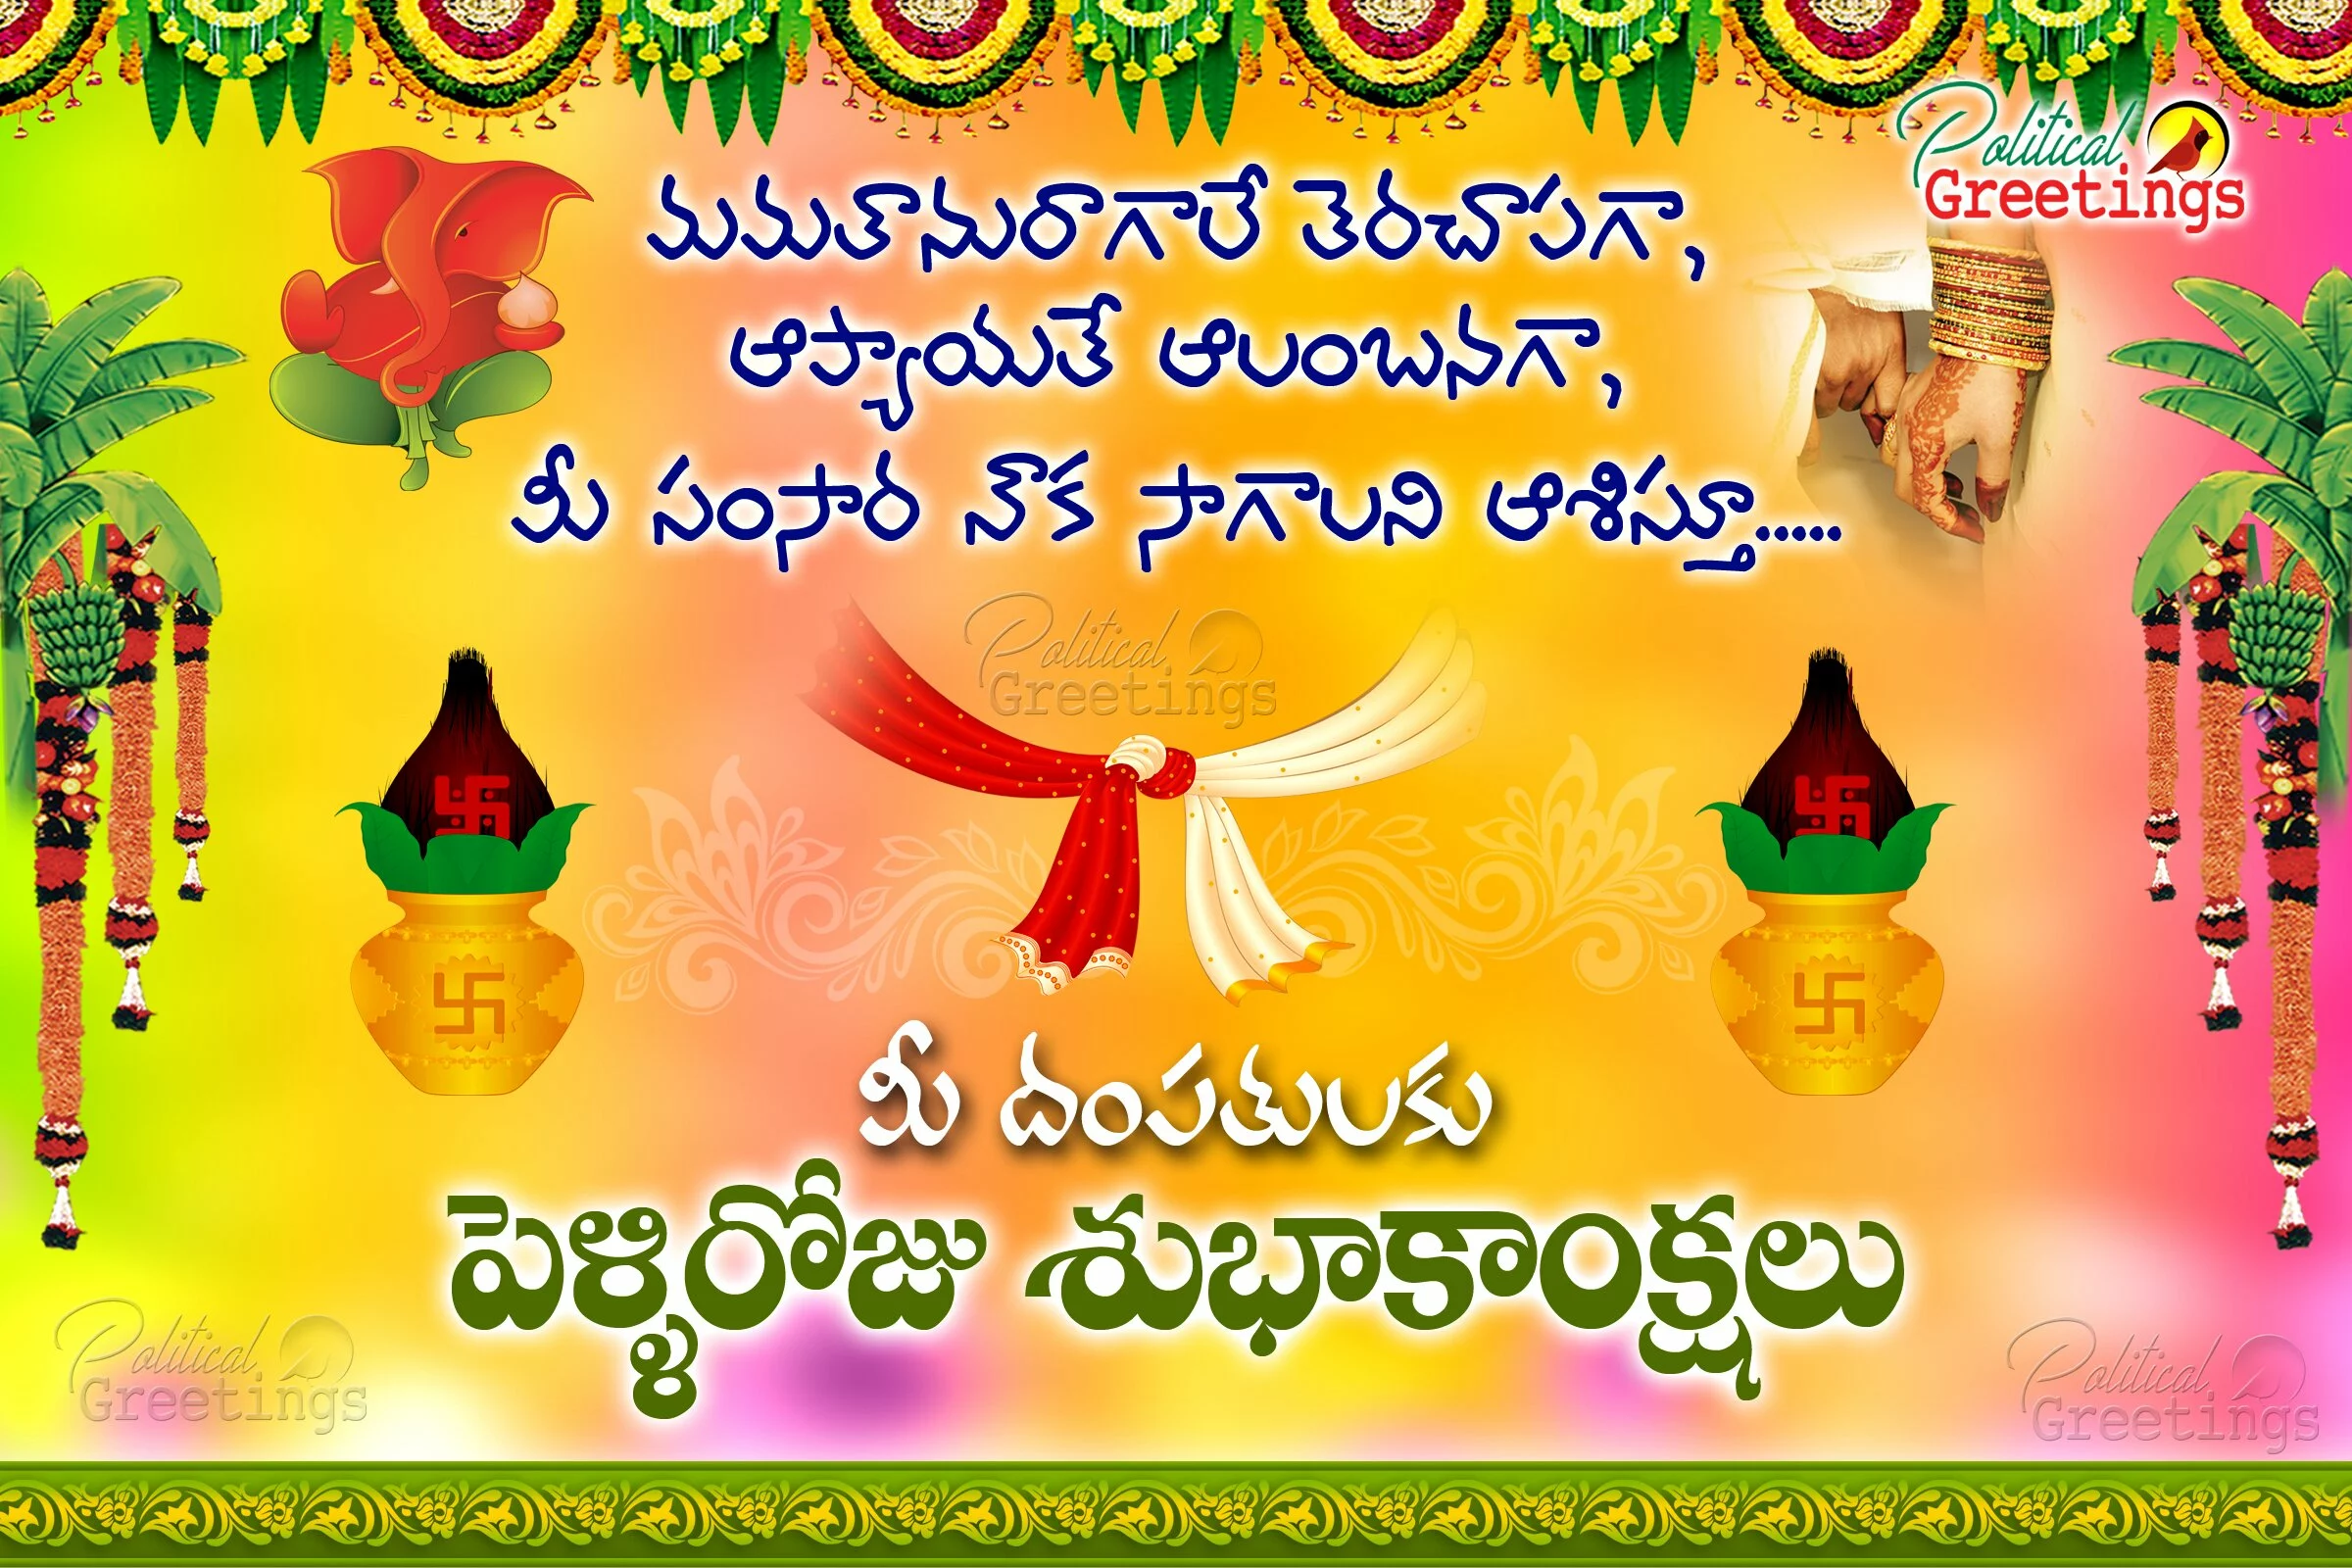 Marriage-Anniversary-Greetings-in-Telugu-Language-politicalgreetings